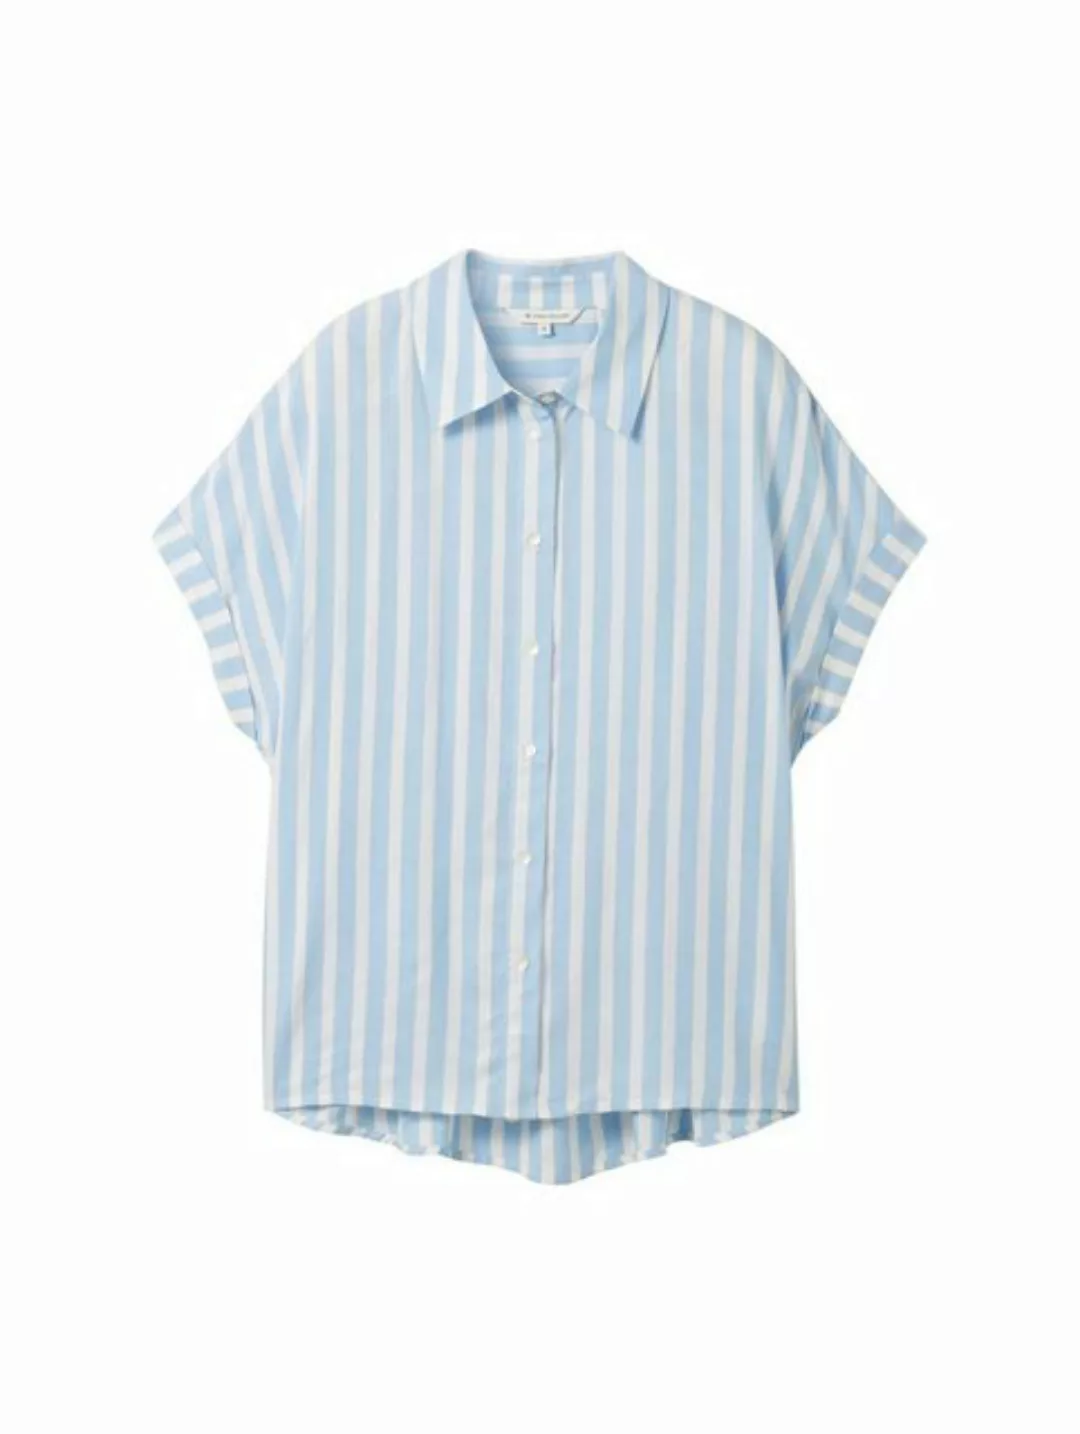 TOM TAILOR Blusenshirt striped short sleeve blouse günstig online kaufen